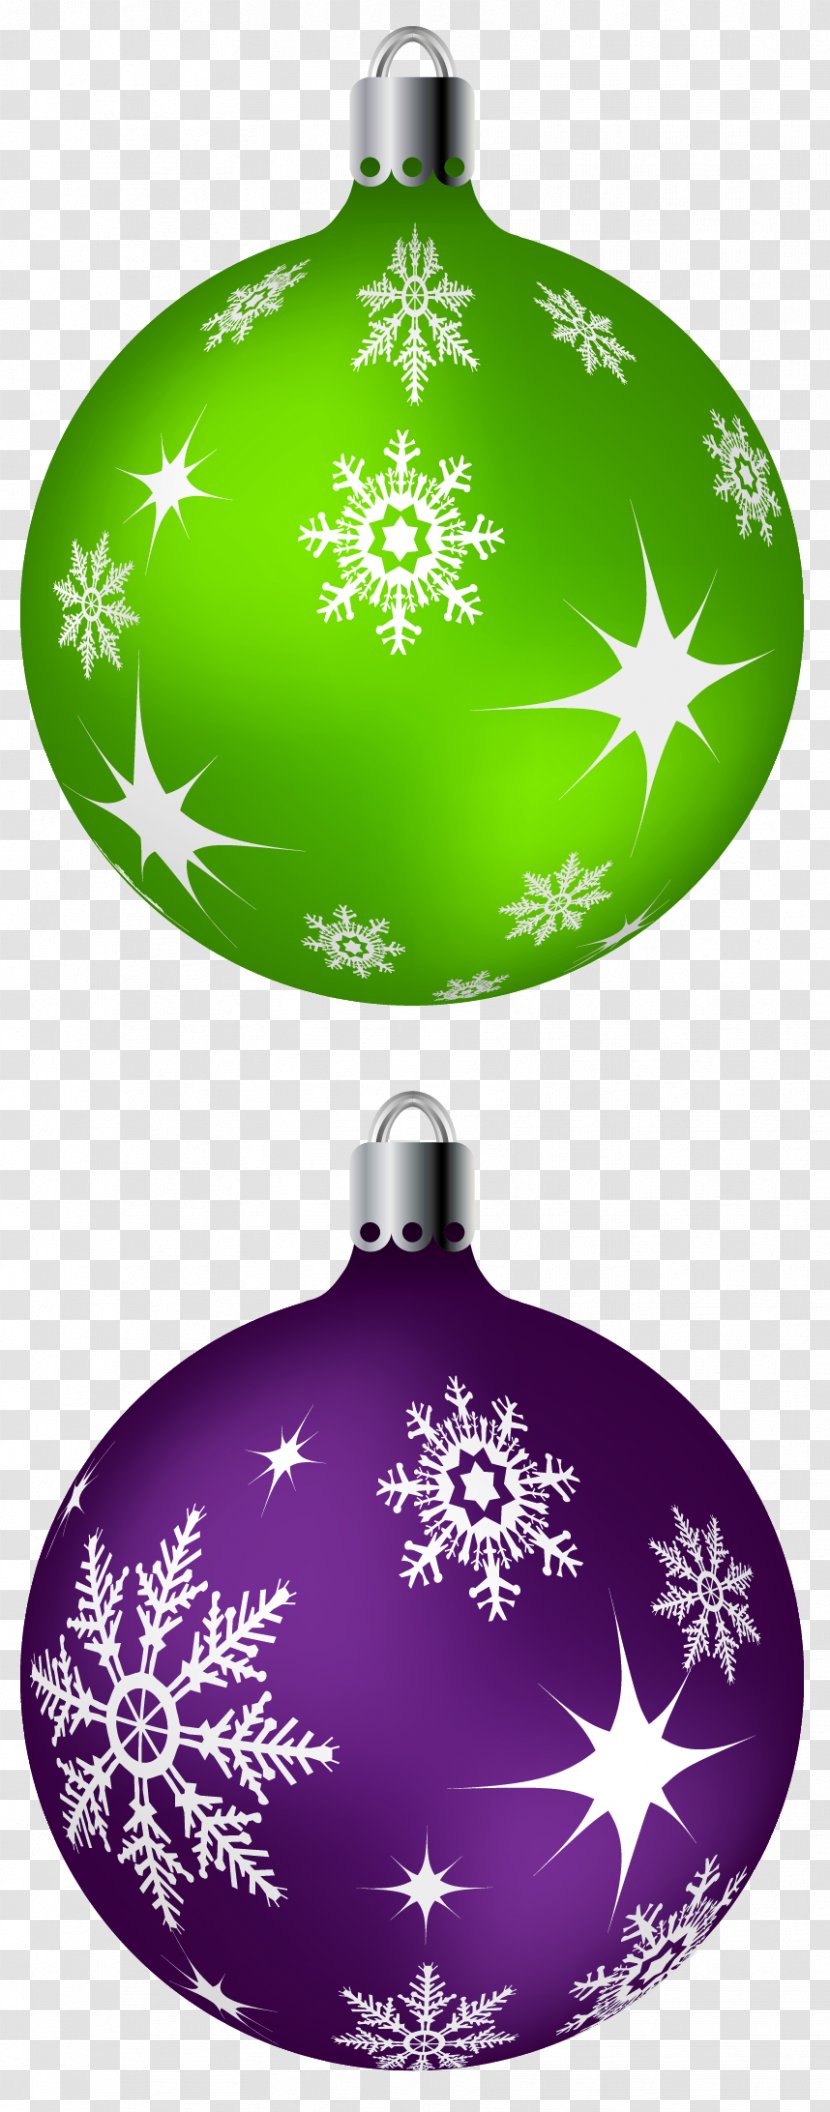 Christmas Ornament Decoration Clip Art - Illustration - Green And Purple Balls Clipart Picture Transparent PNG